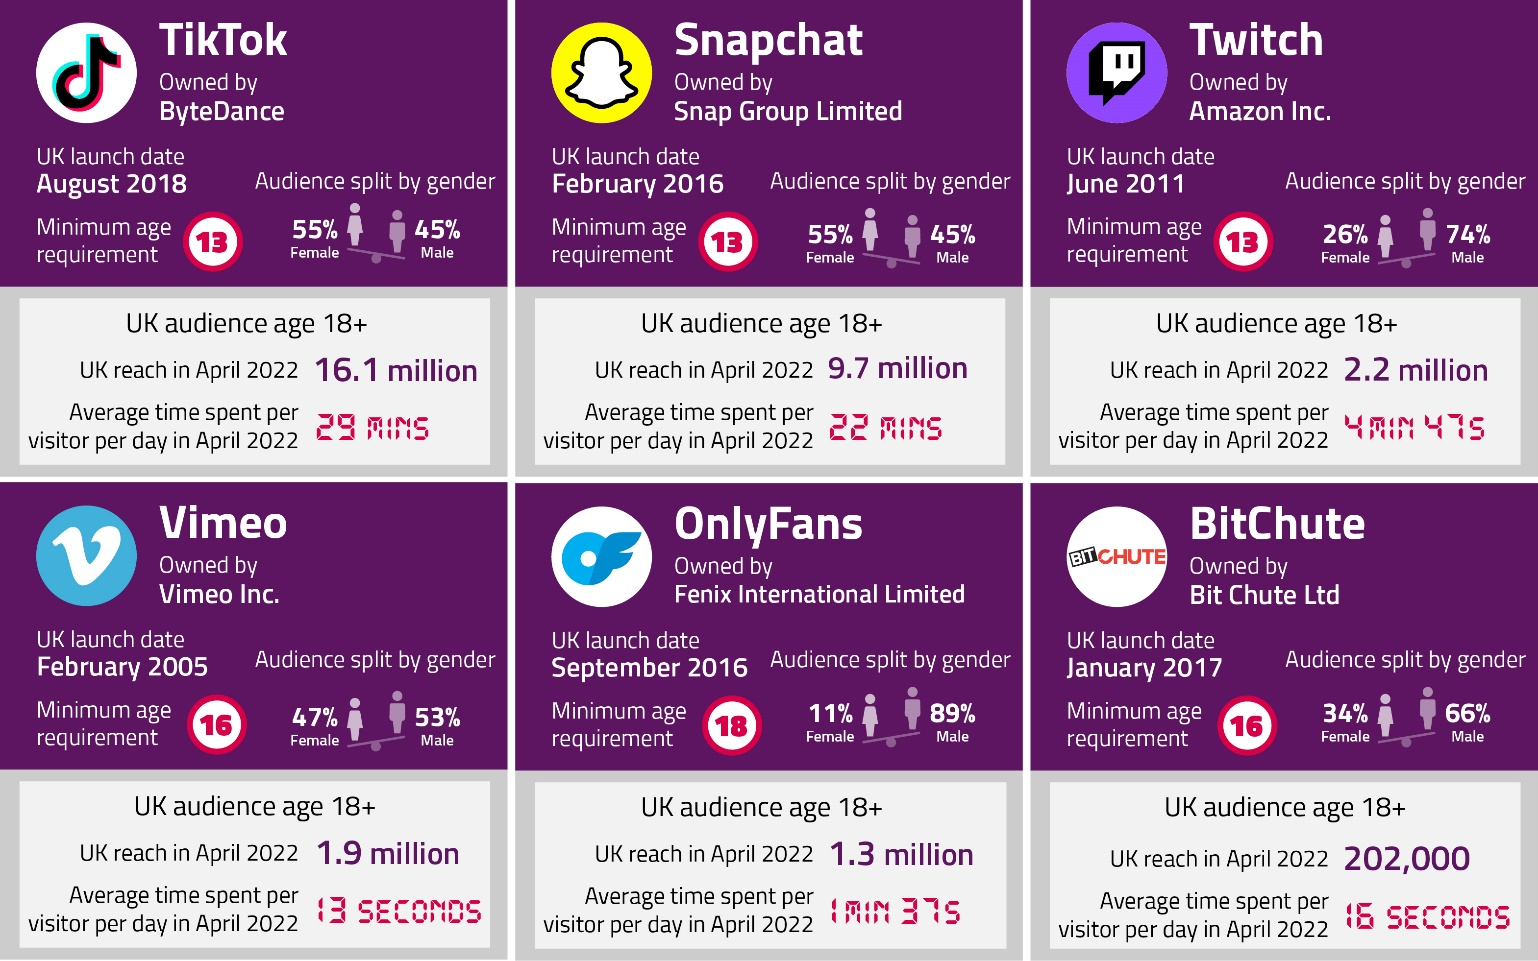 Six biggest notified UK-established video-sharing platforms: TikTok, Snapchat, Twitch, Vimeo, OnlyFans and BitChute